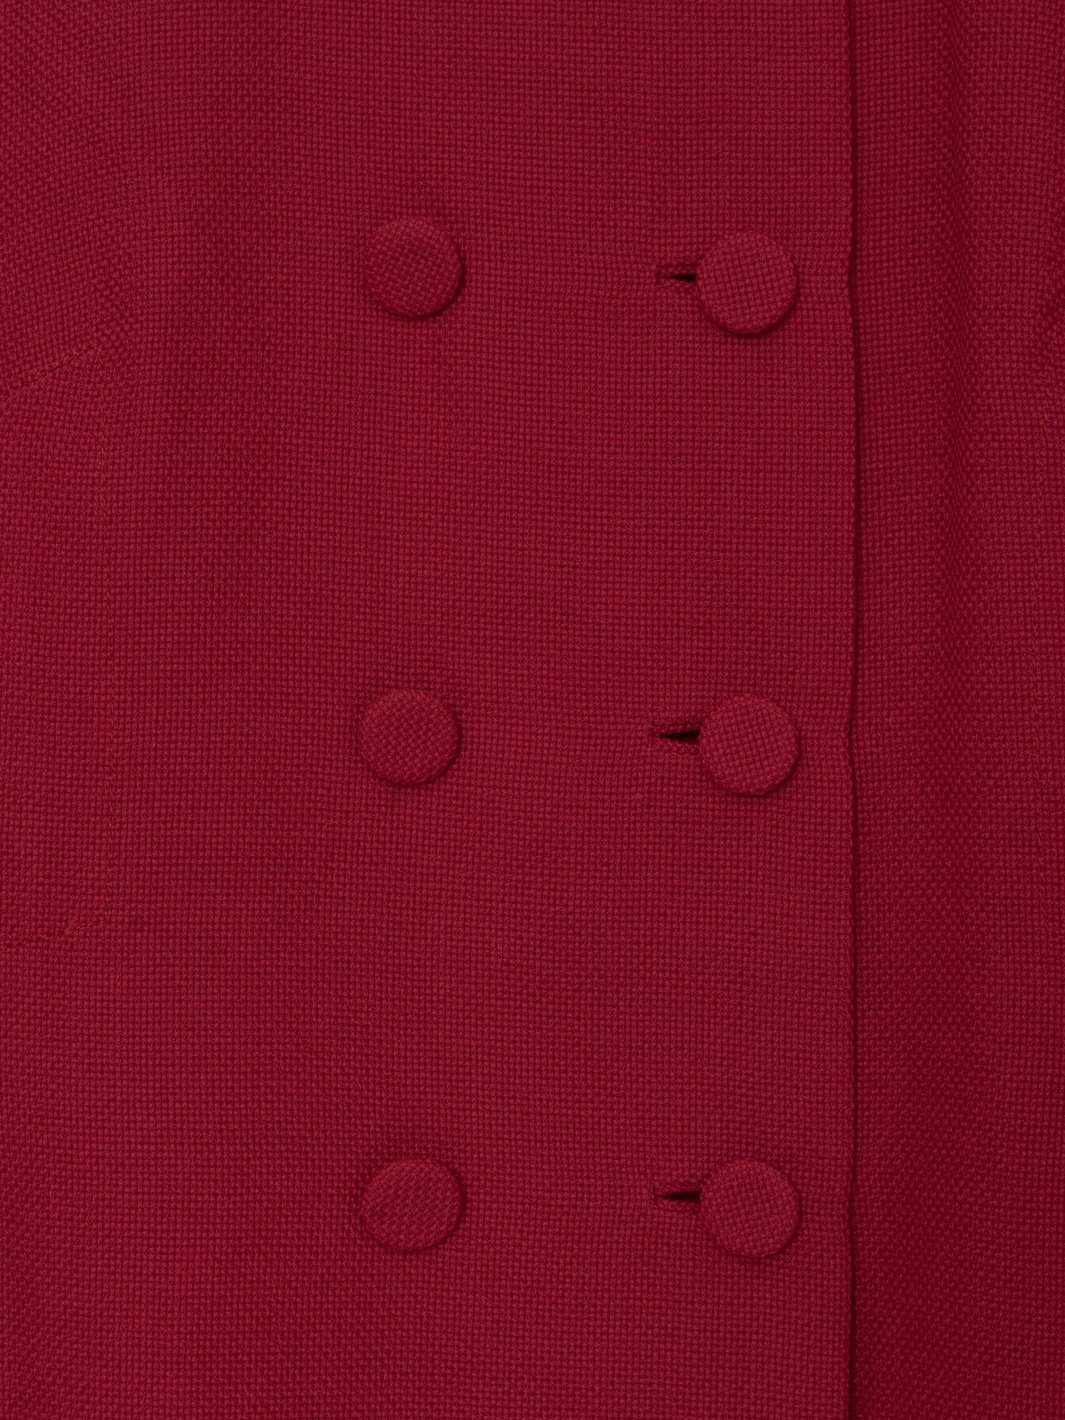 1960s Sorelle Fontana overcoat in red wool